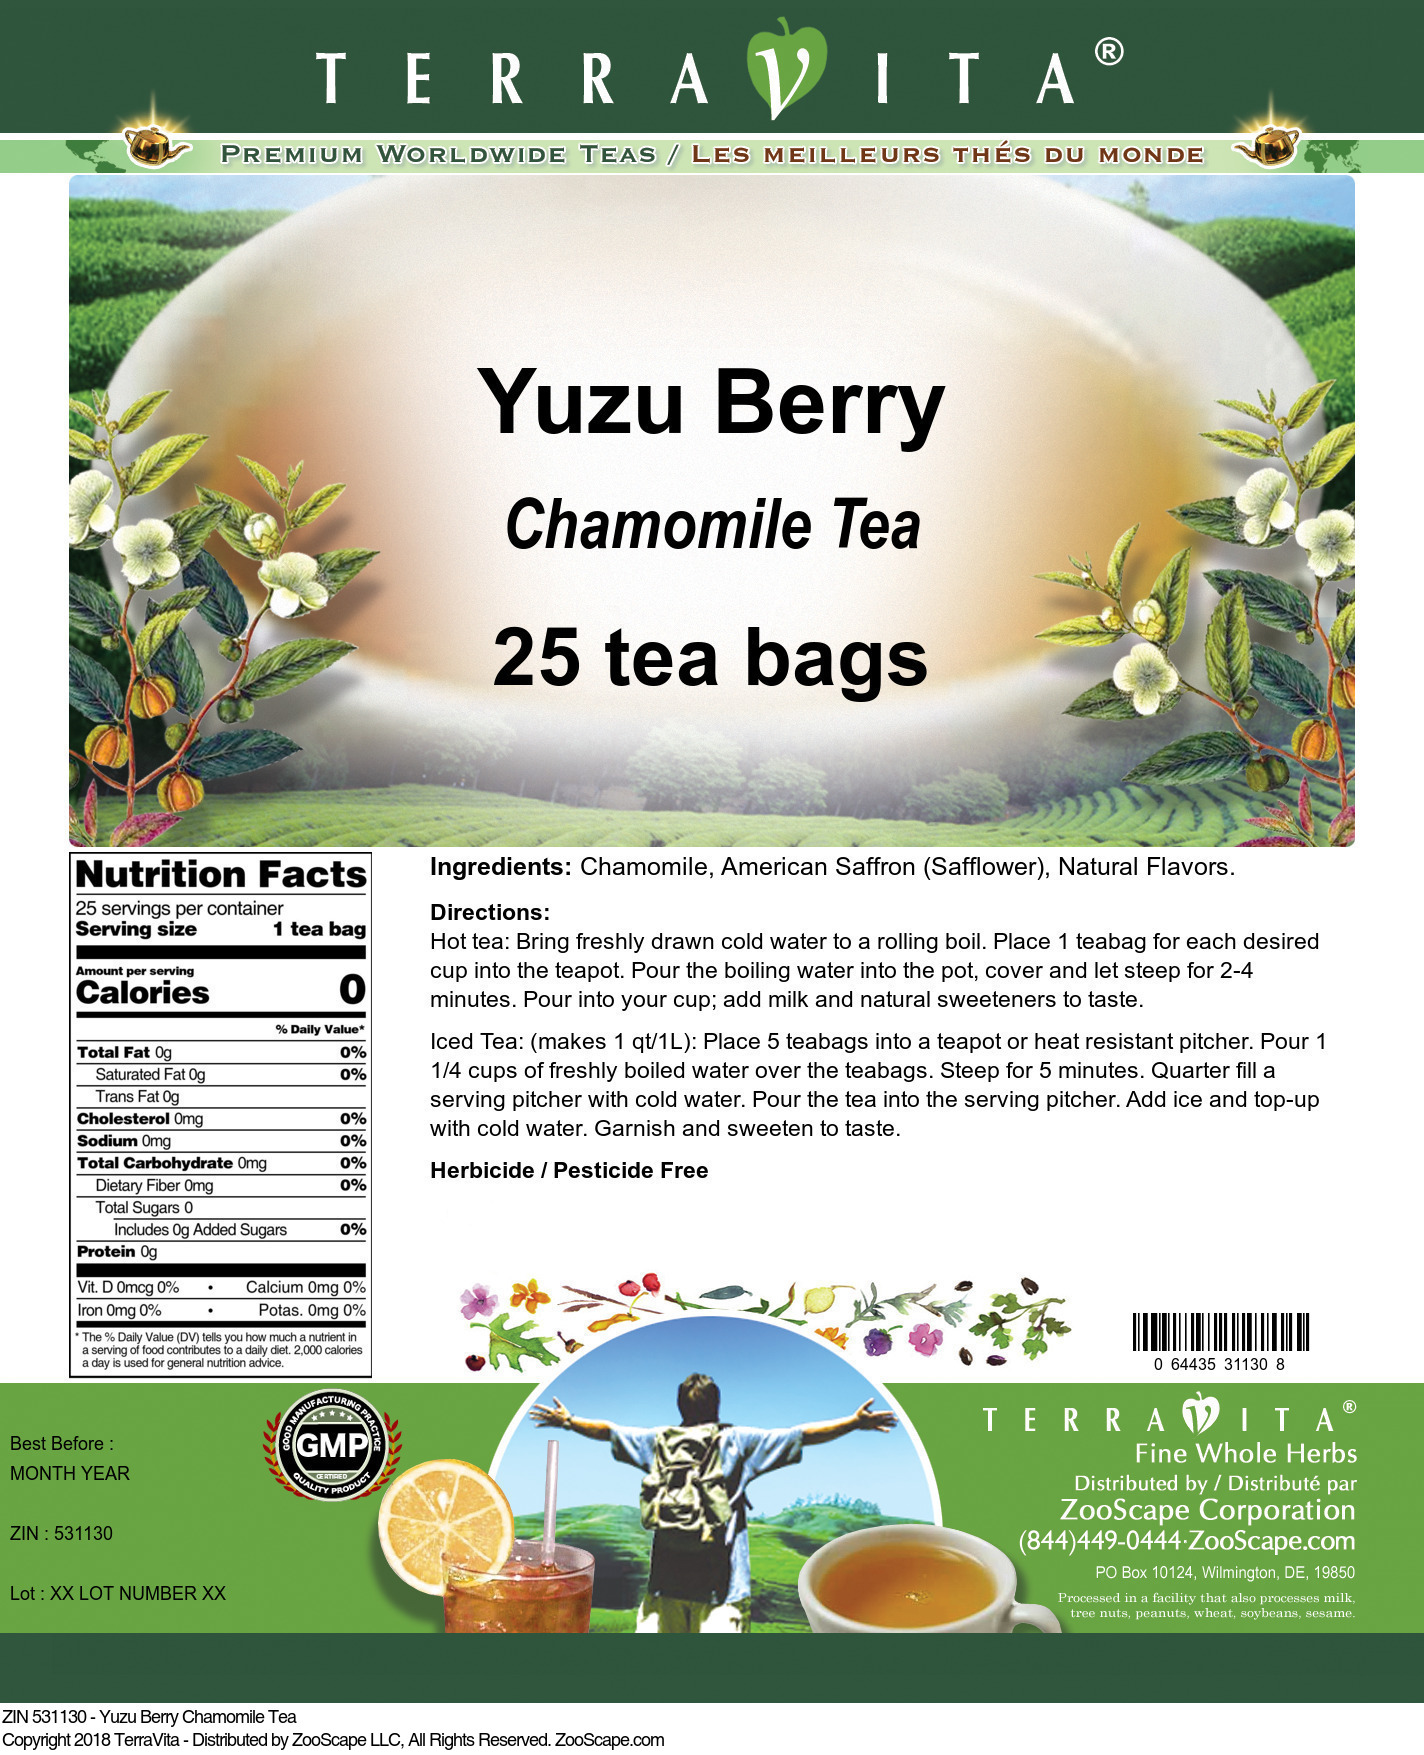 Yuzu Berry Chamomile Tea - Label